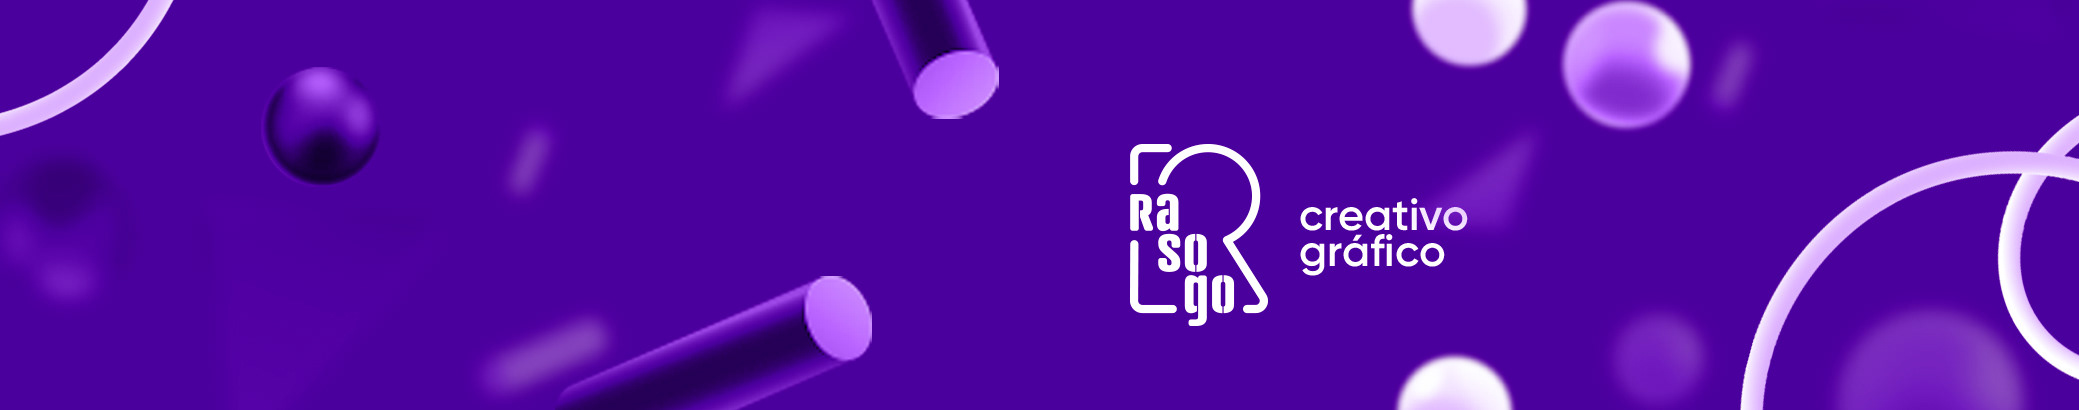 Raul Solis (R a s o g o)'s profile banner